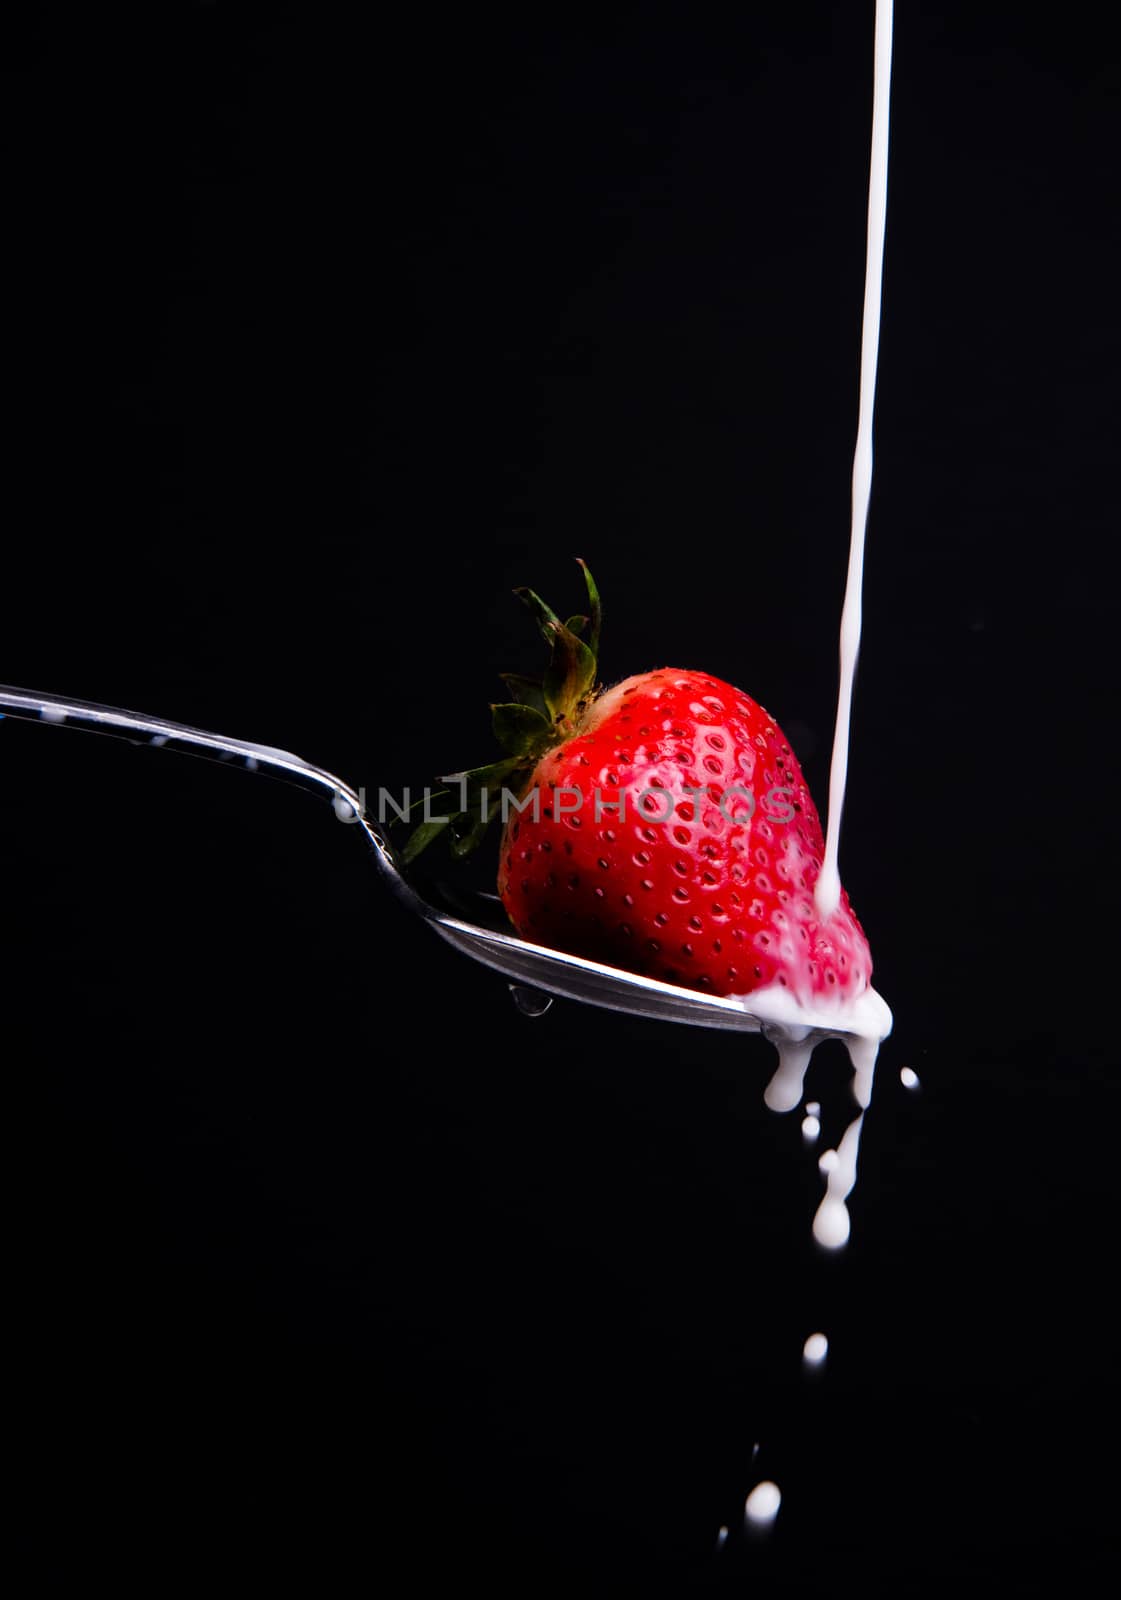 Raw Food Fruit Strawberry Milk Splash on Spoon by ChrisBoswell